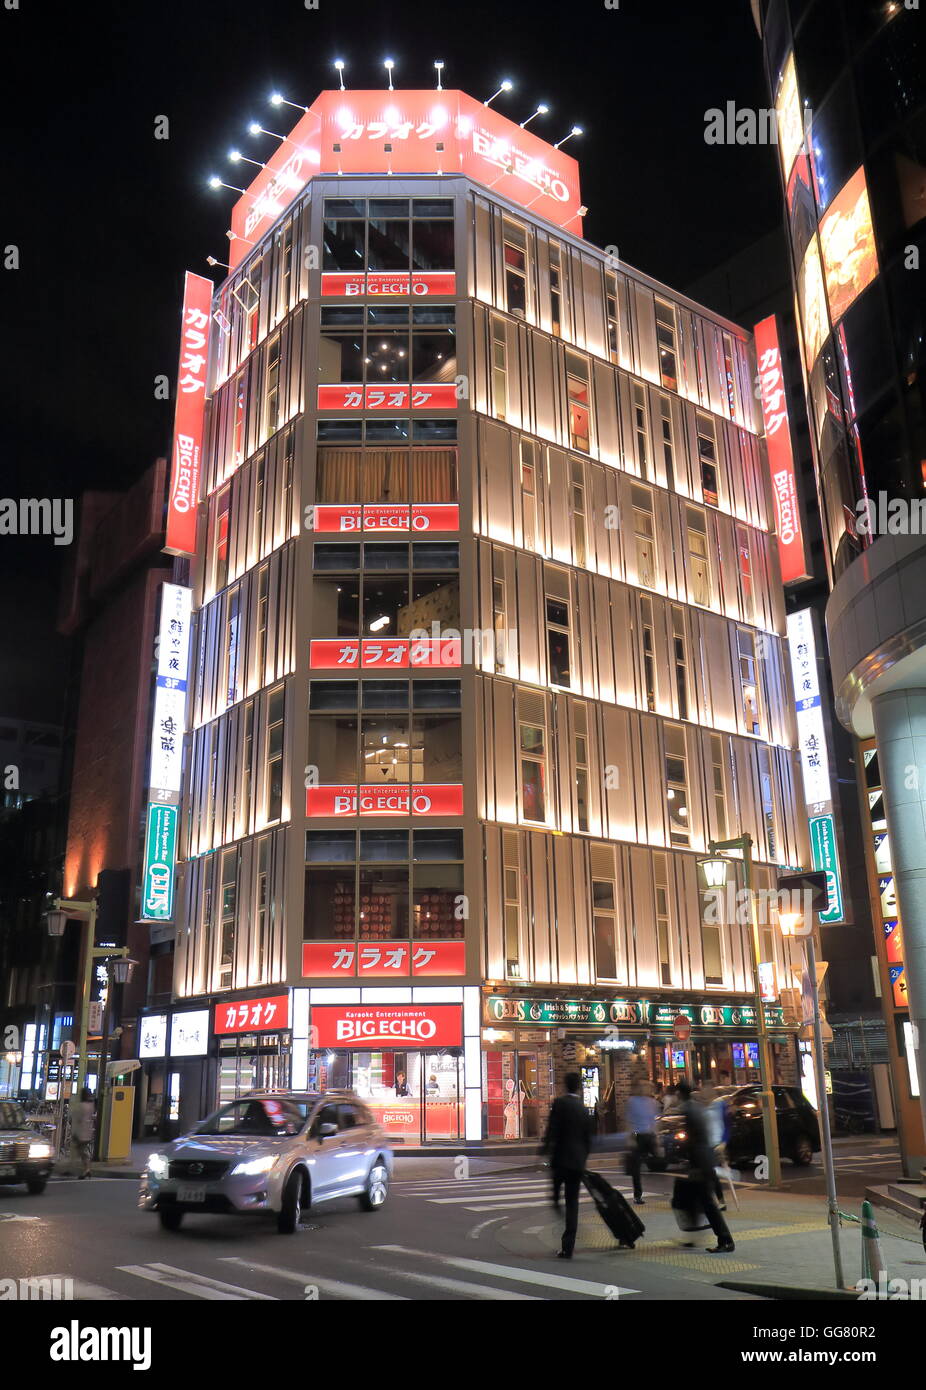 Big Echo Karaoke box shop in Nagoya Japan one of the largest Karaoke box  chain in Japan Stock Photo - Alamy